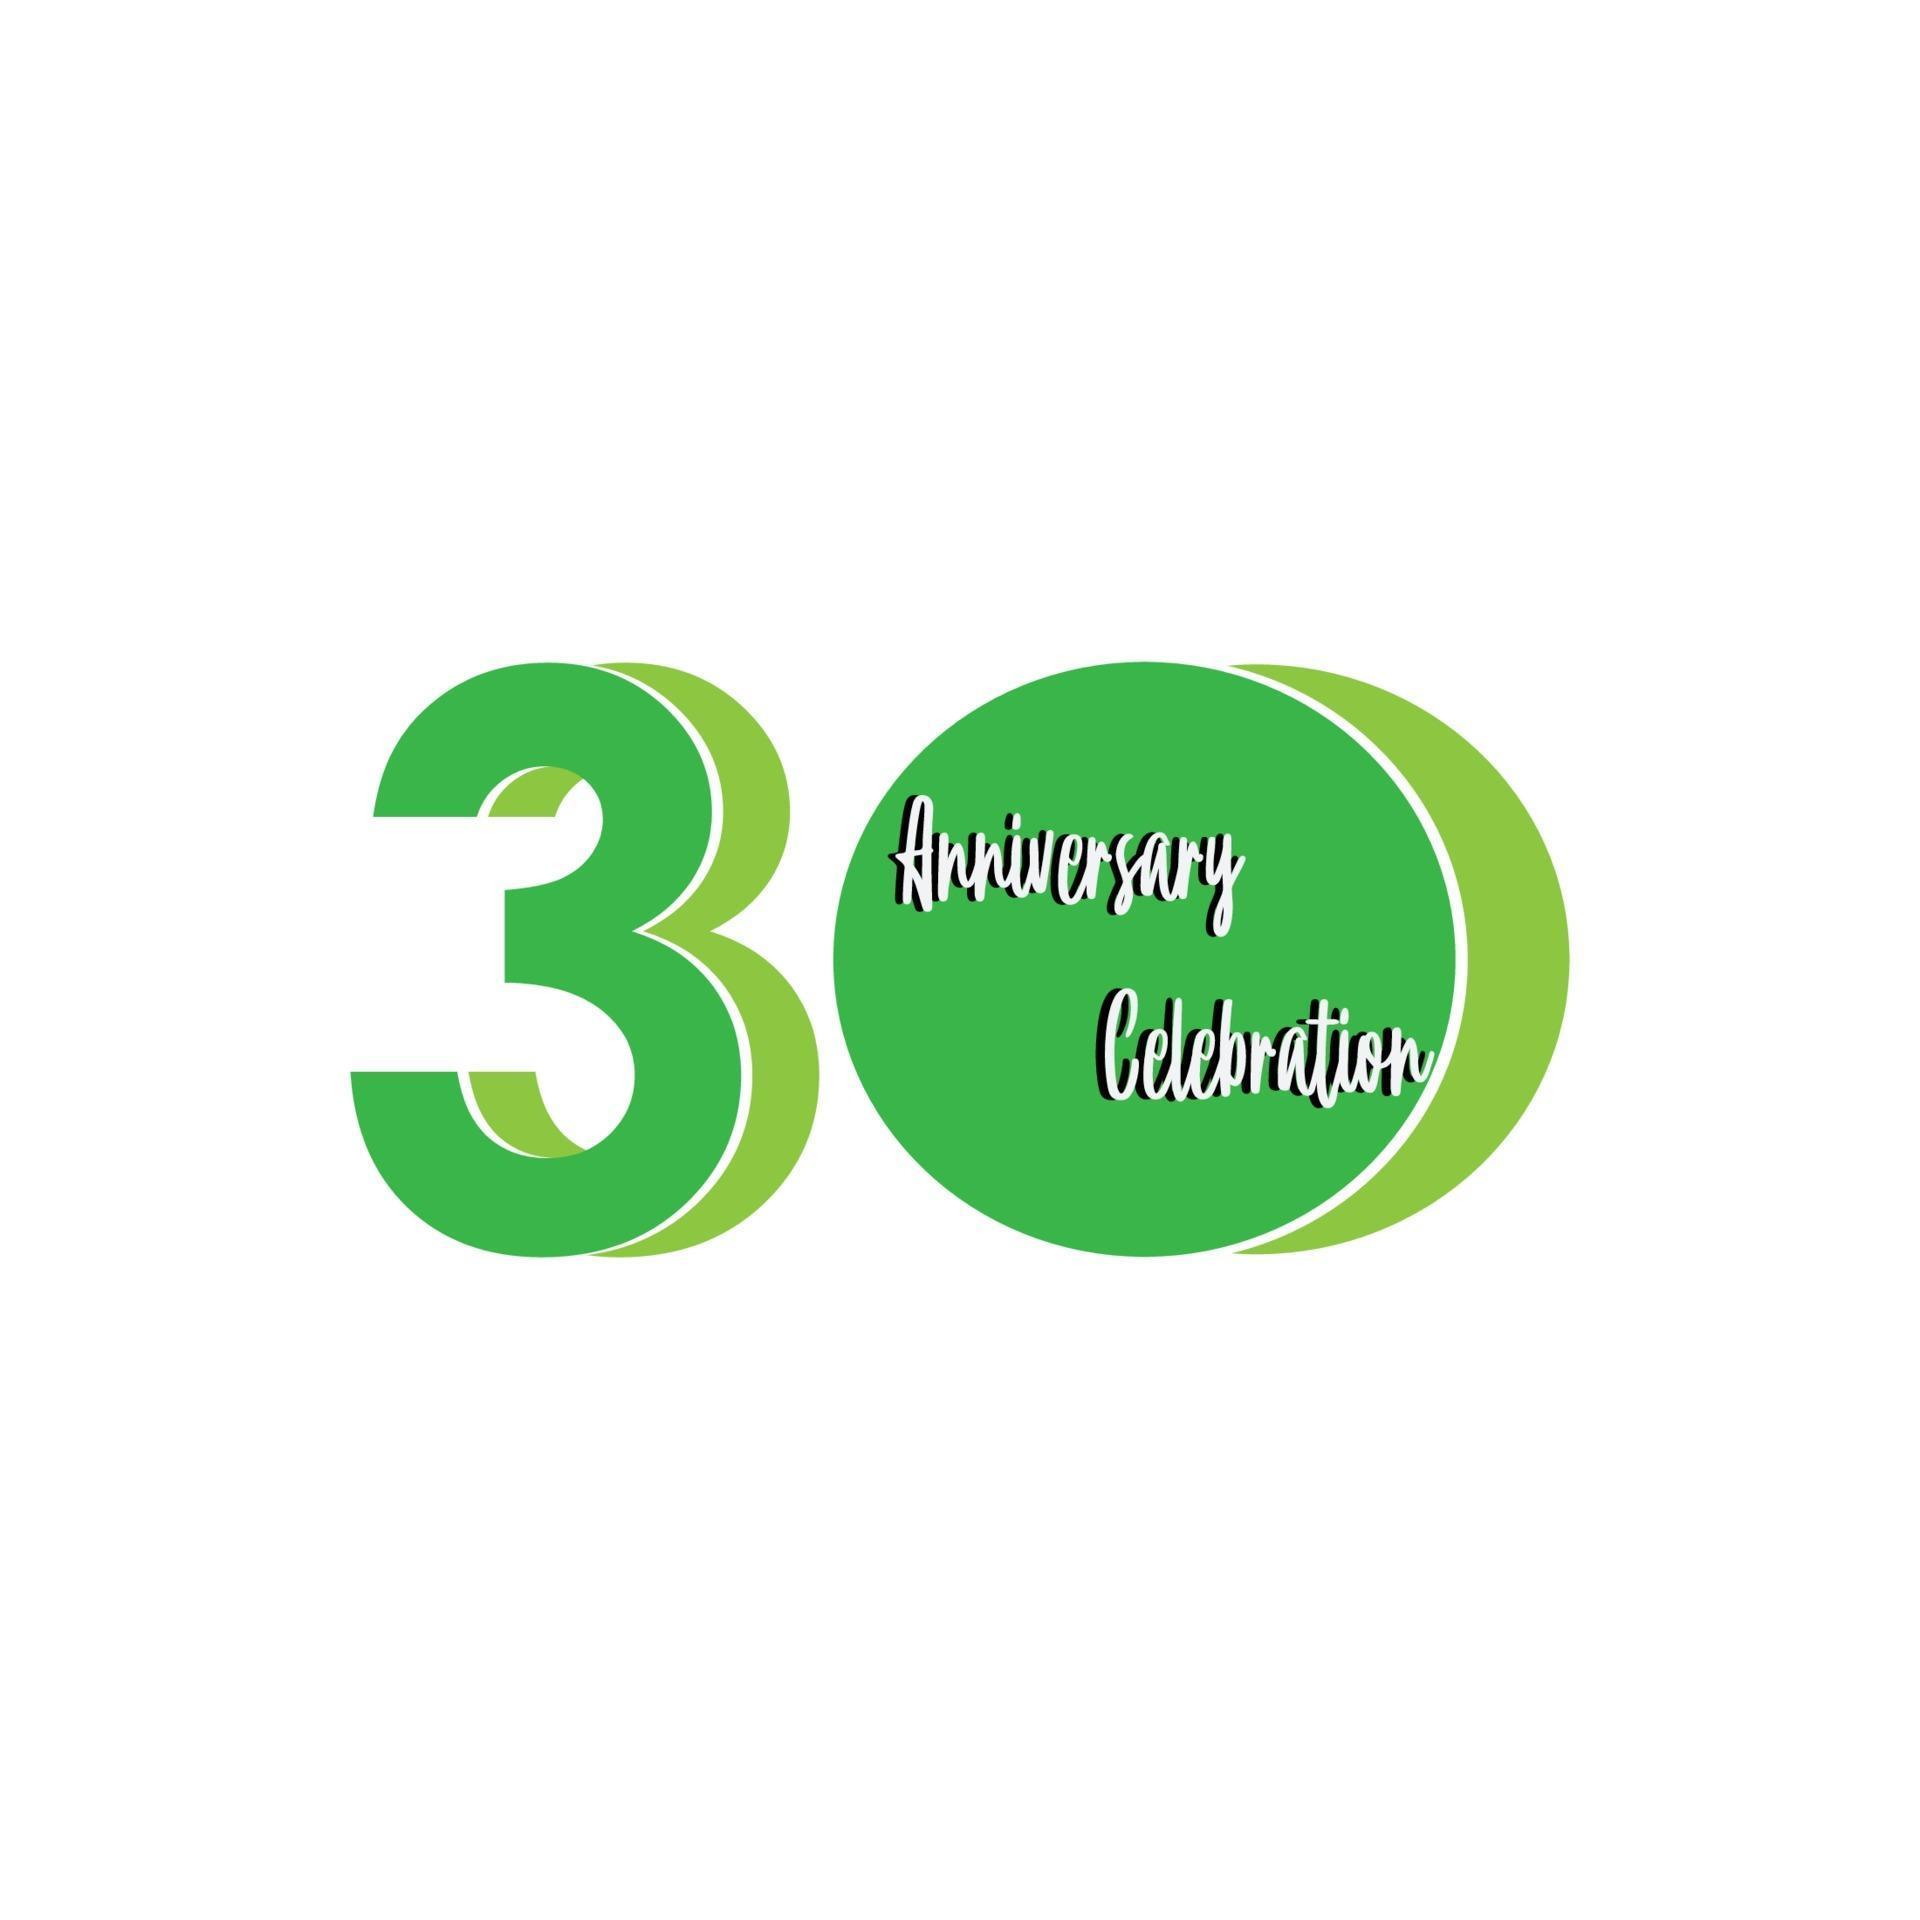 30 Years Anniversary Celebration Green Vector Template Design ...